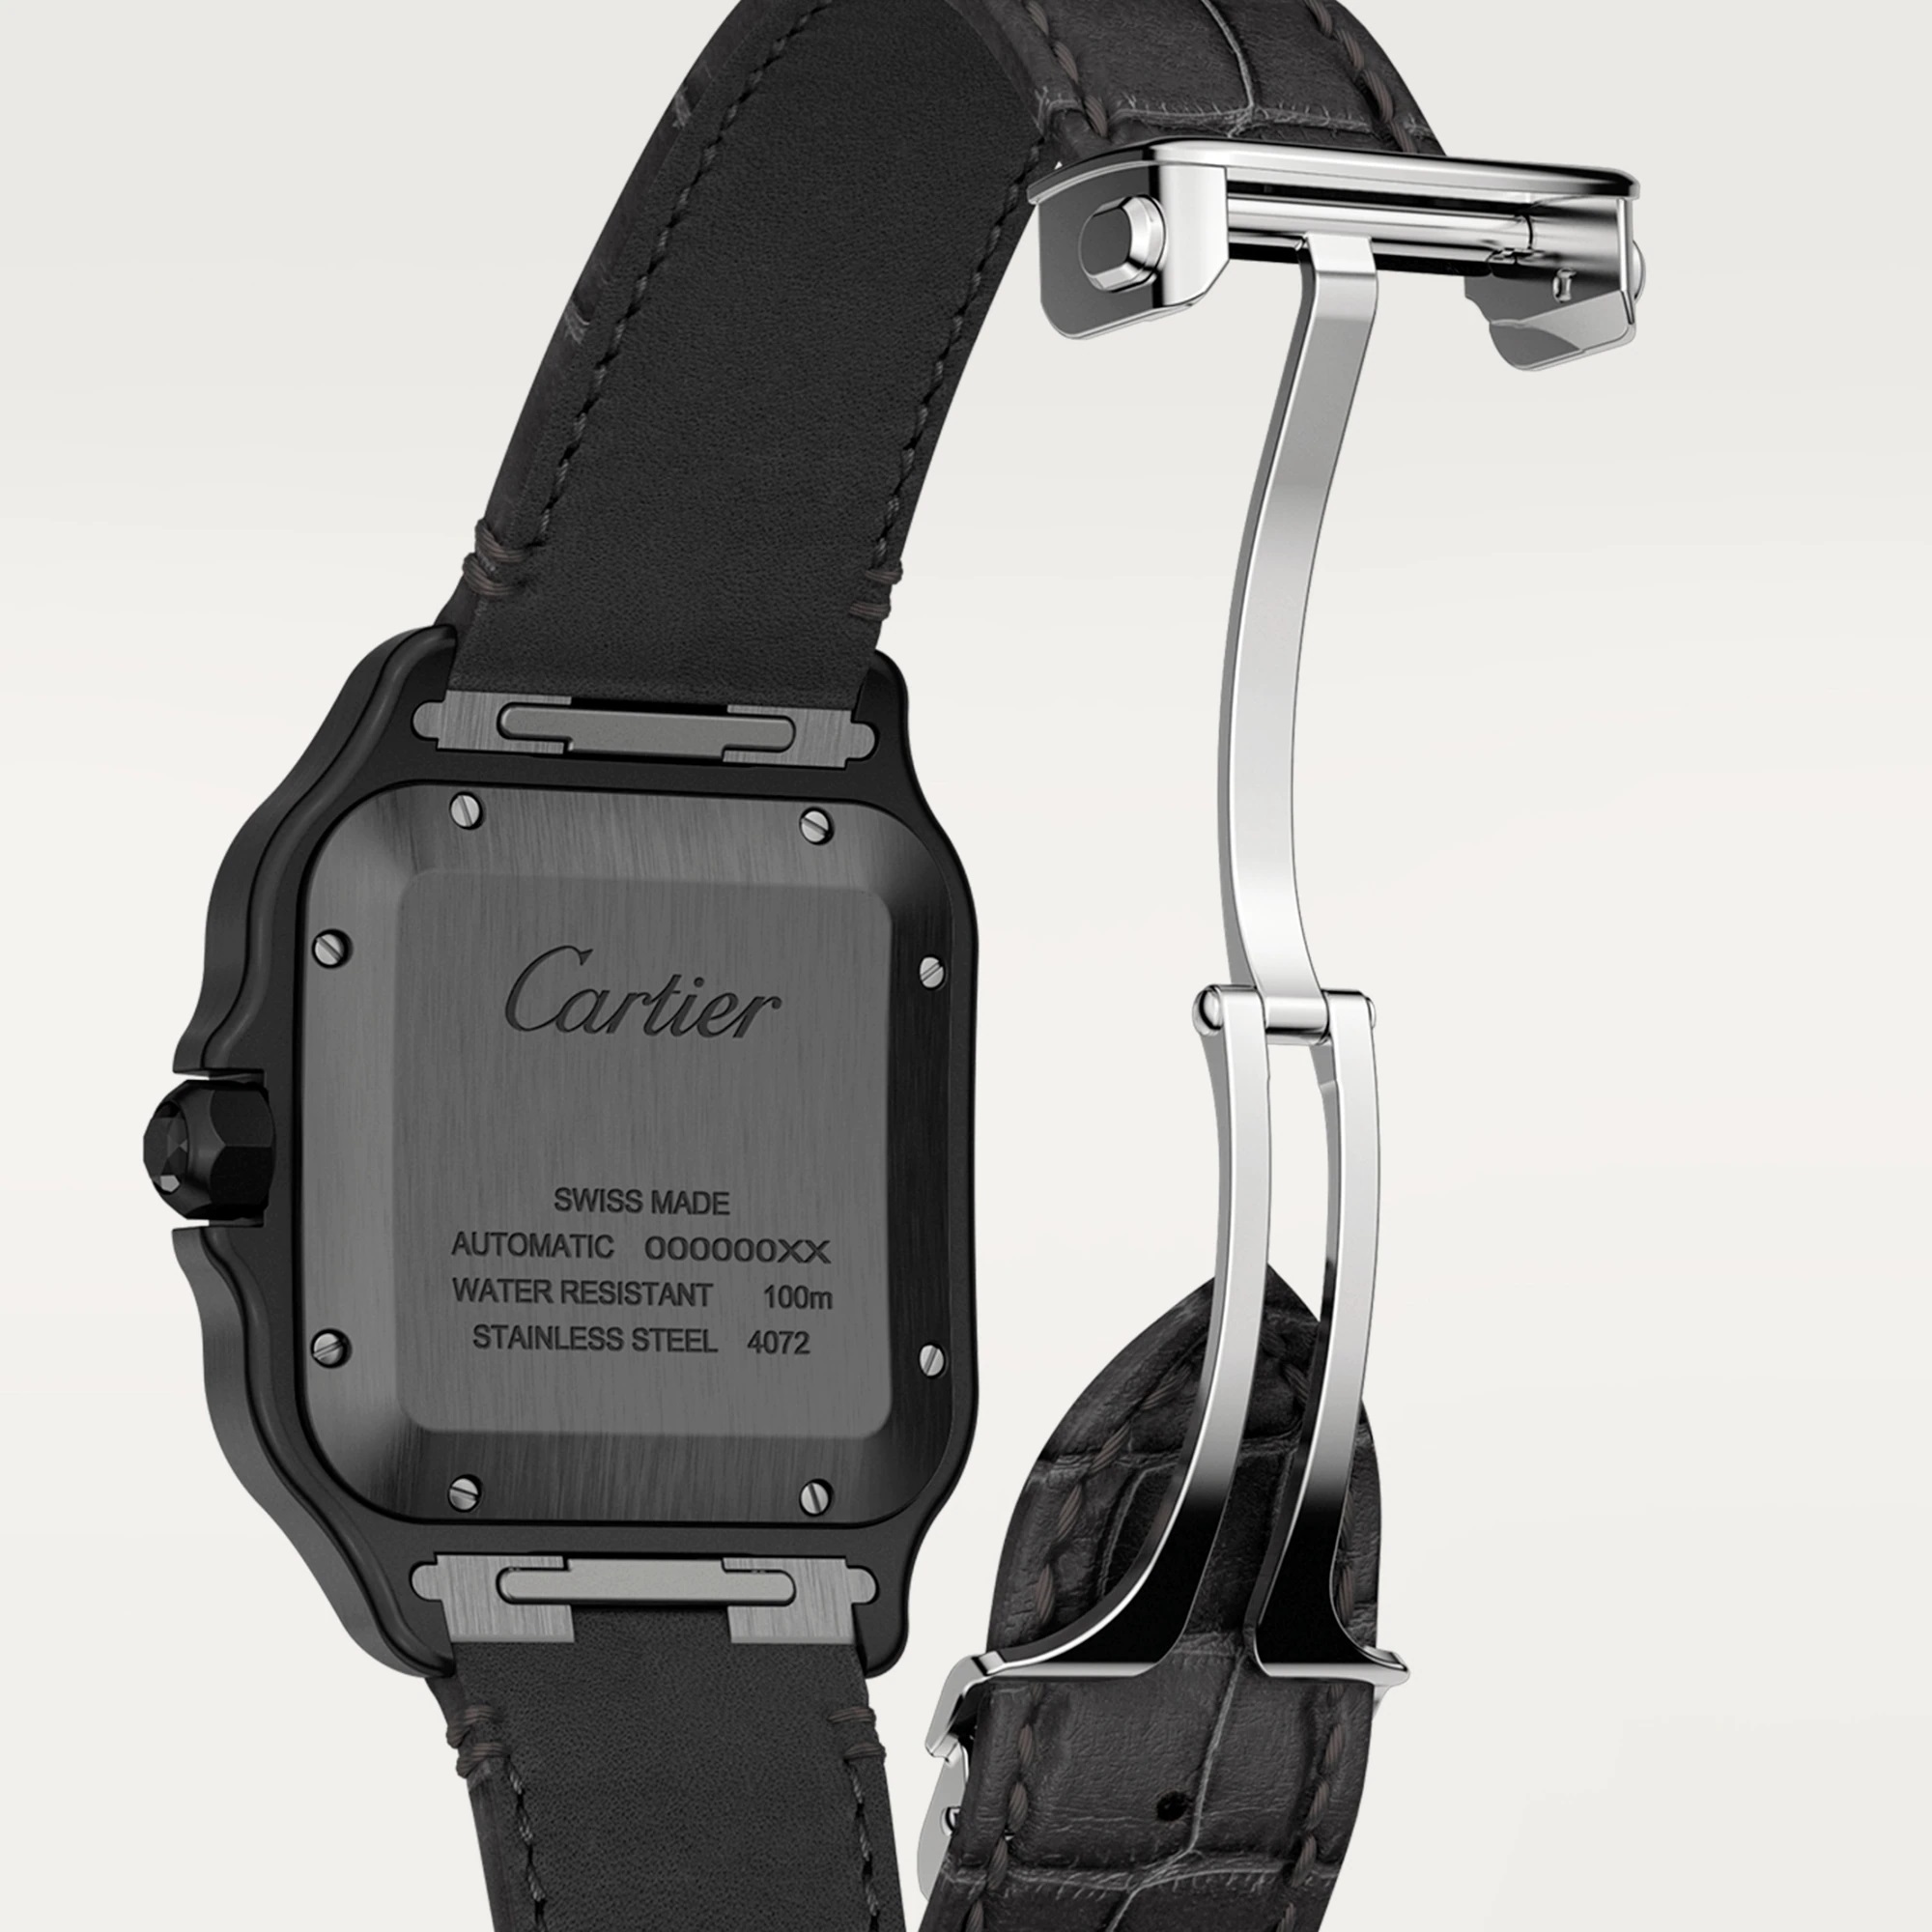 Santos de Cartier Steel and Rubber Watch, large
